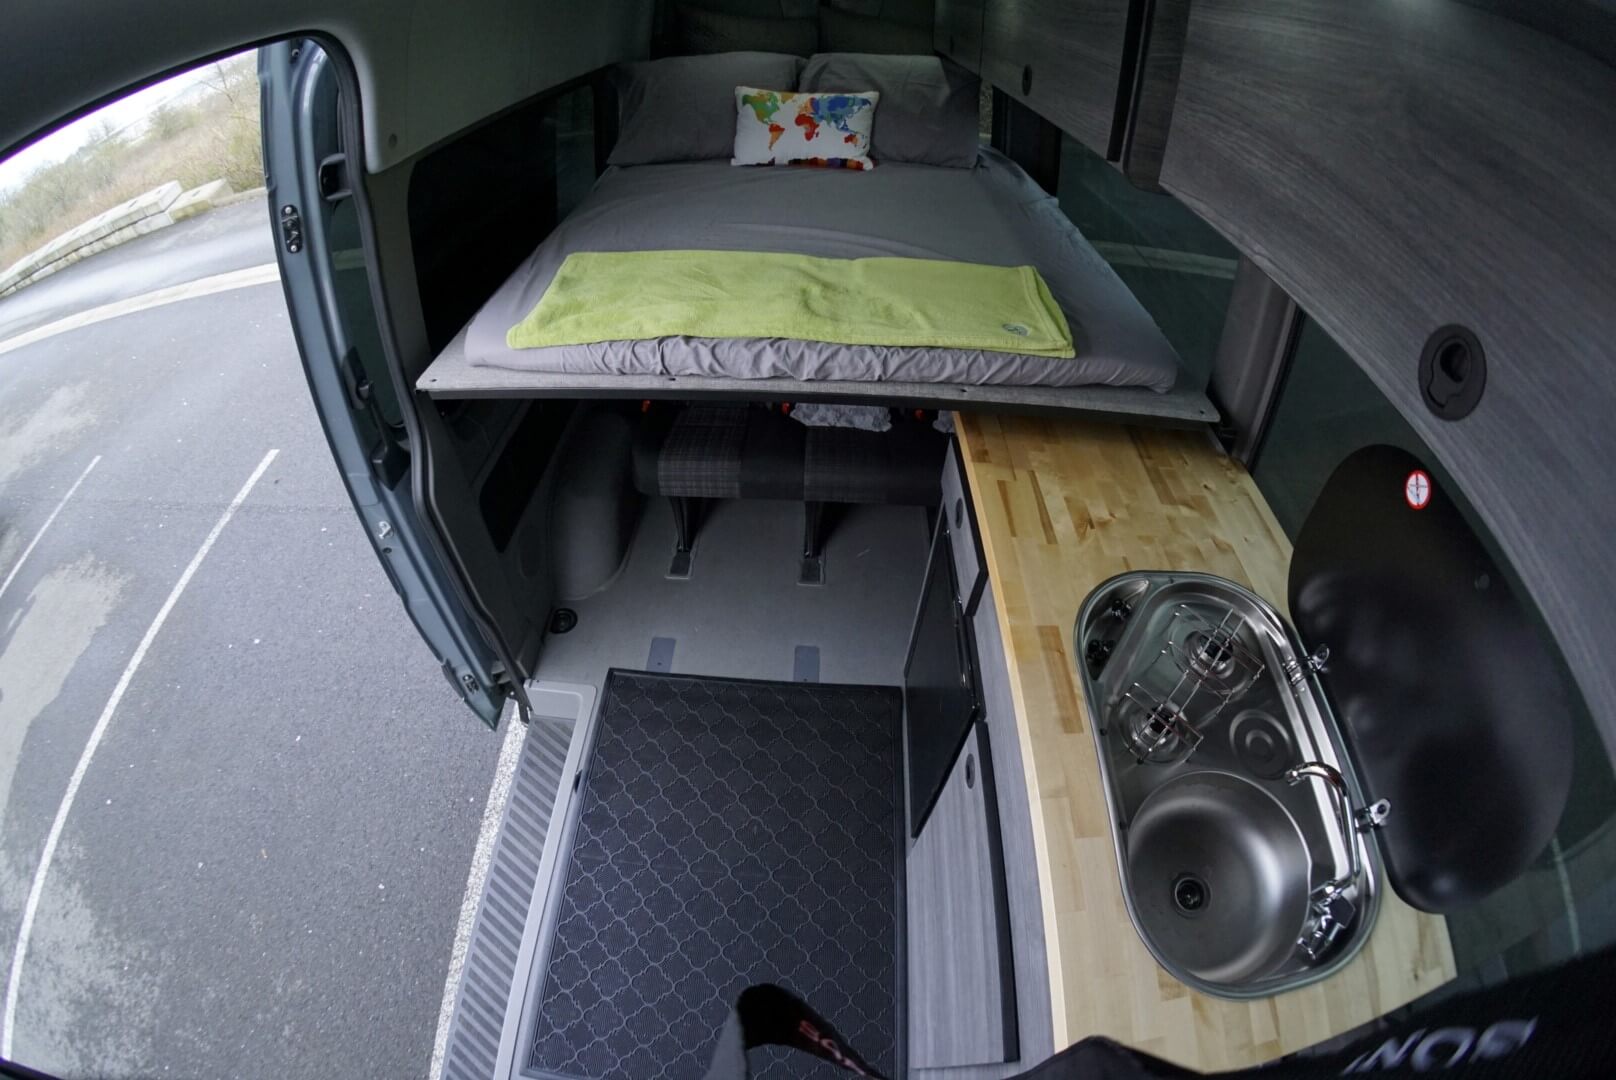 Superfeet Sprinter Van Custom Interior - Kitchen!